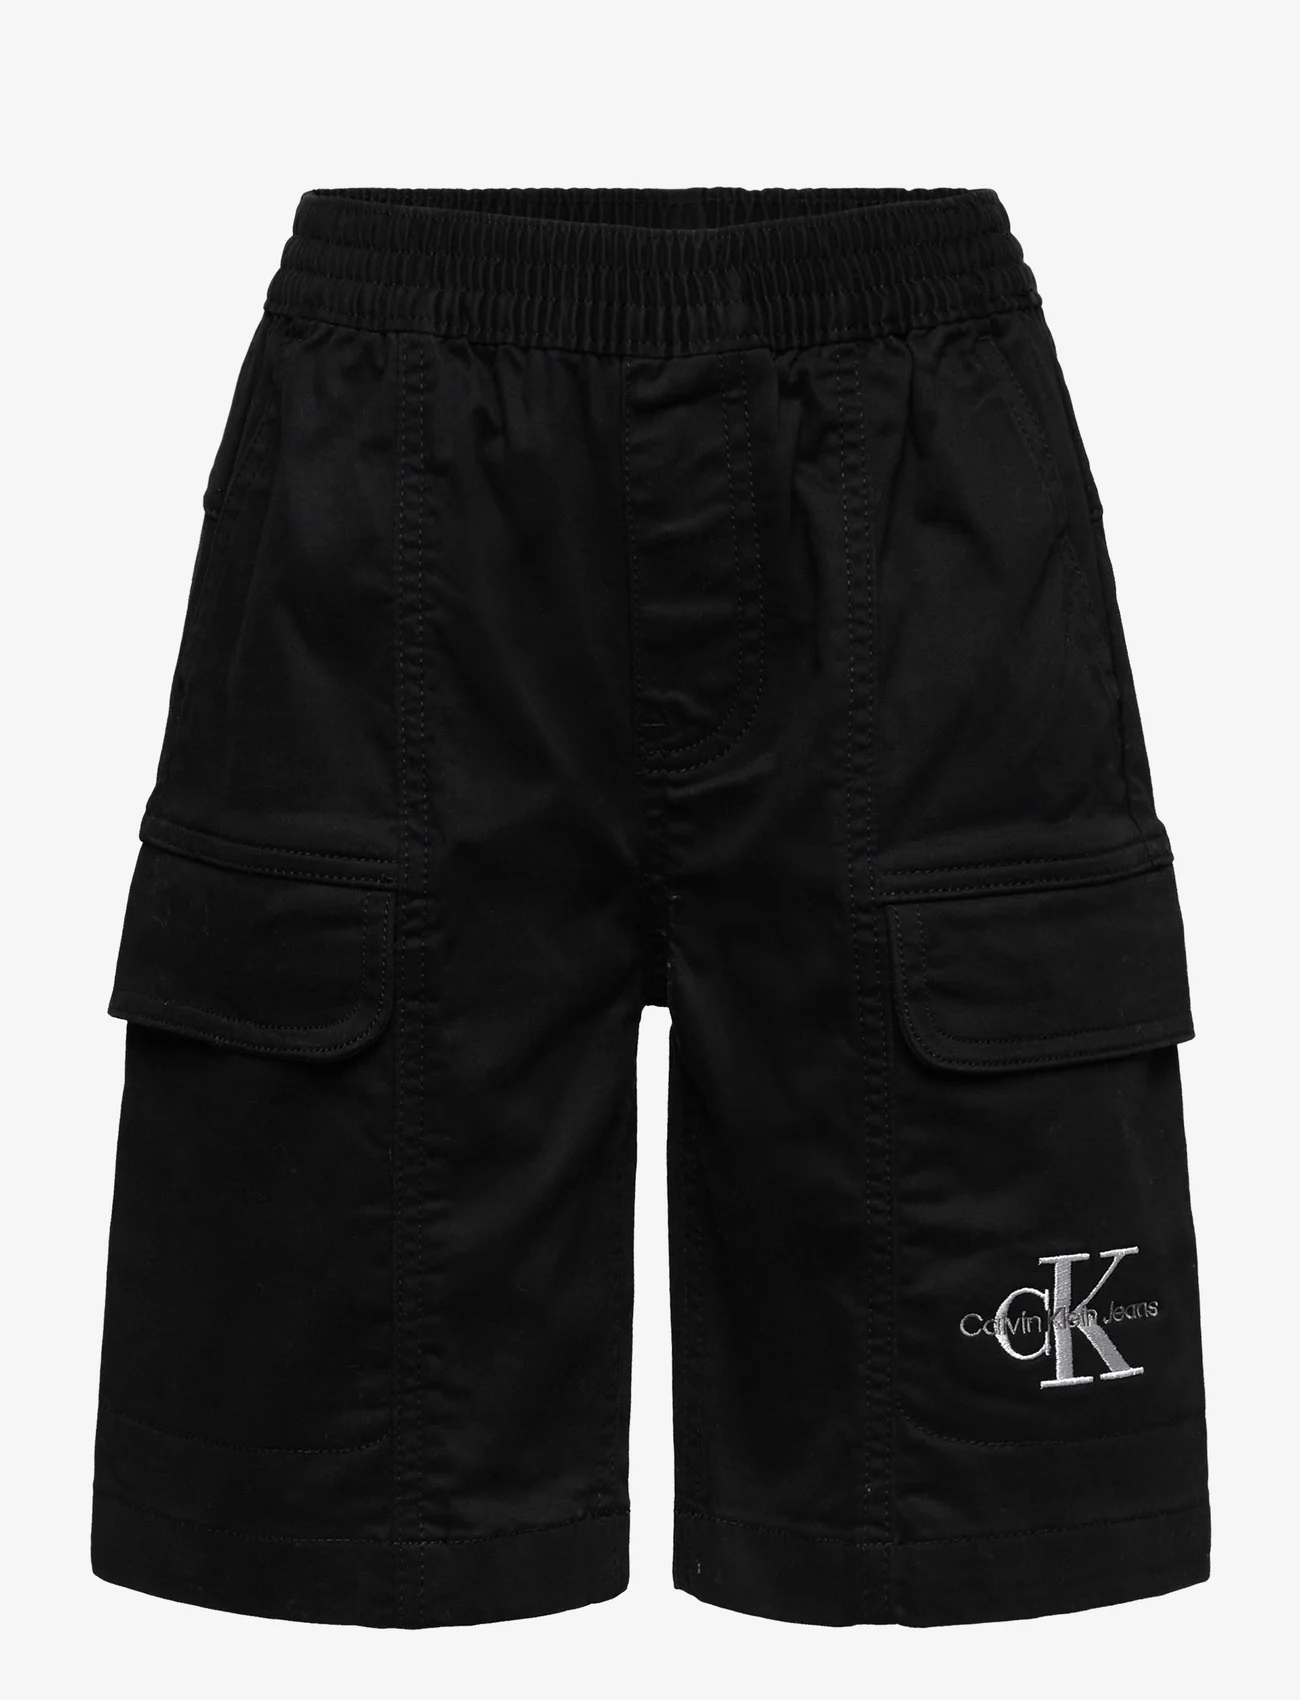 Calvin Klein - SATEEN CARGO SHORTS - sweat shorts - ck black - 0